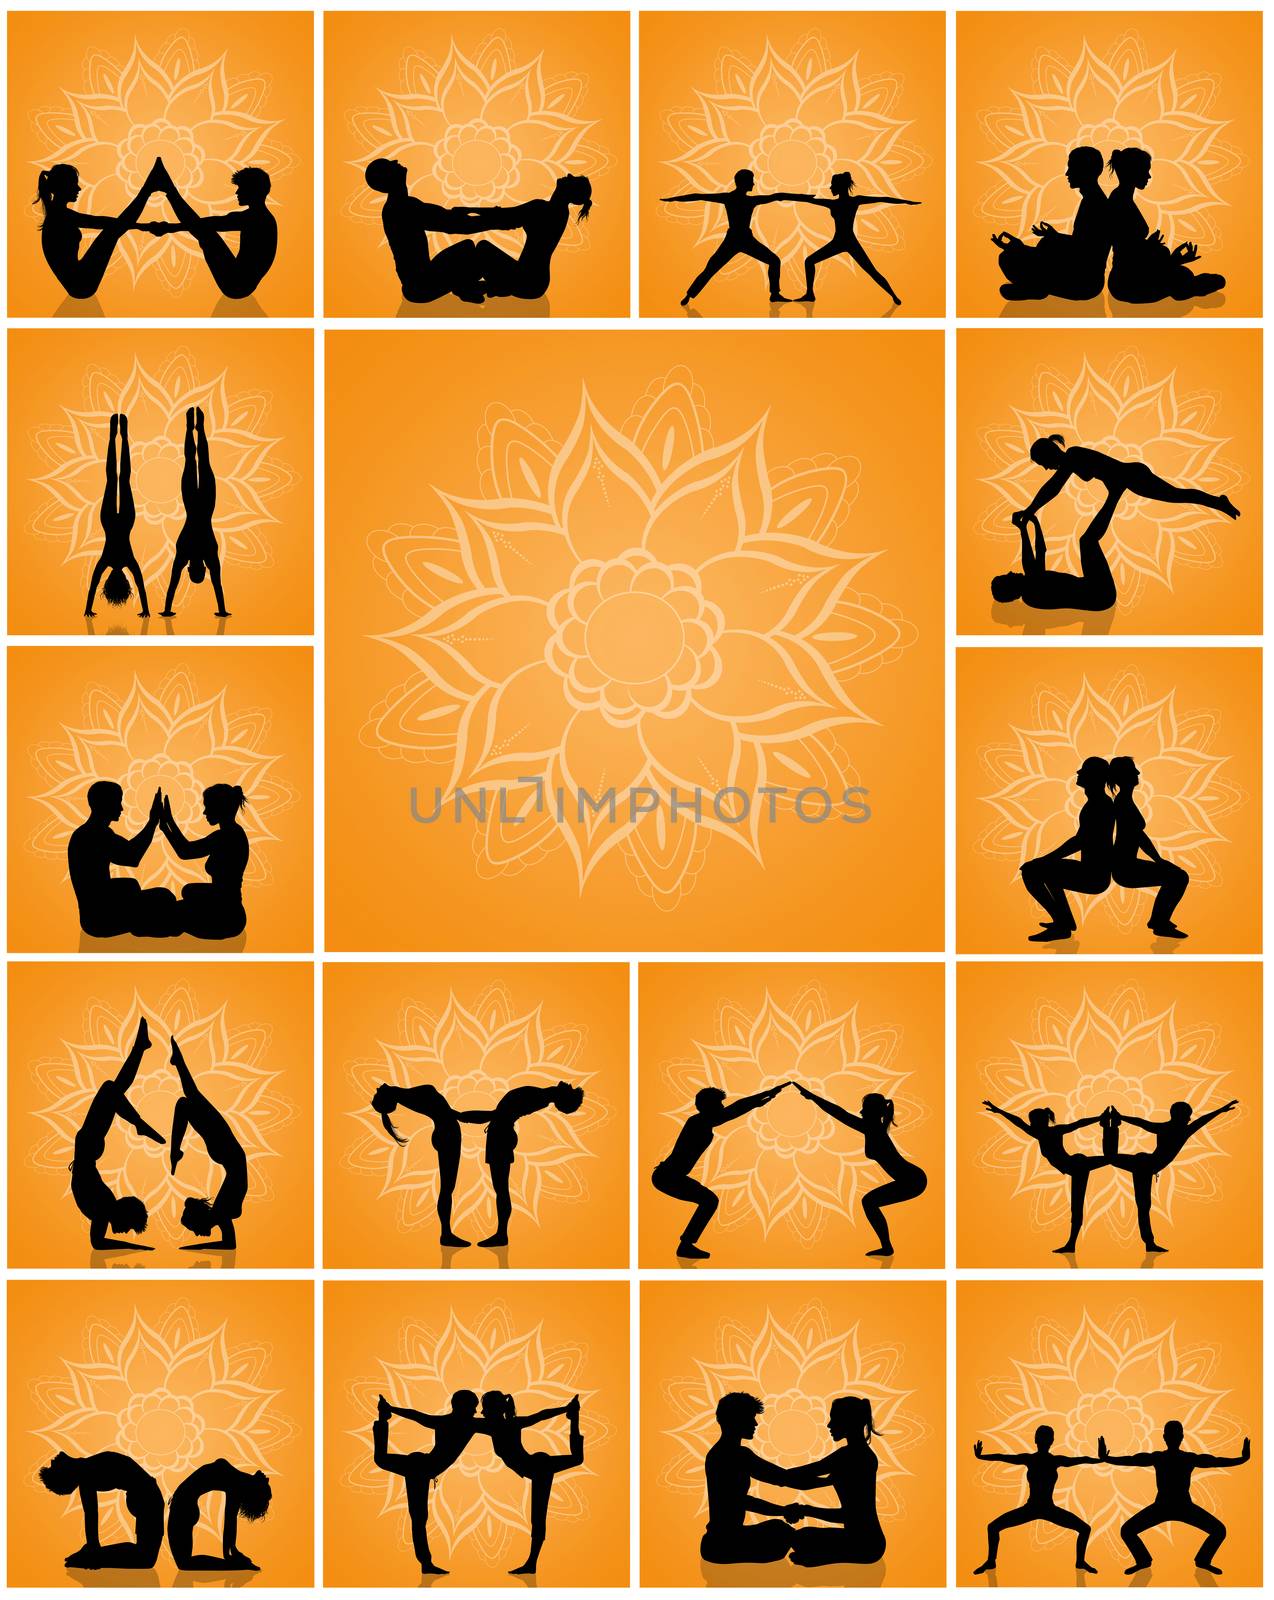 illustration of various yoga poses